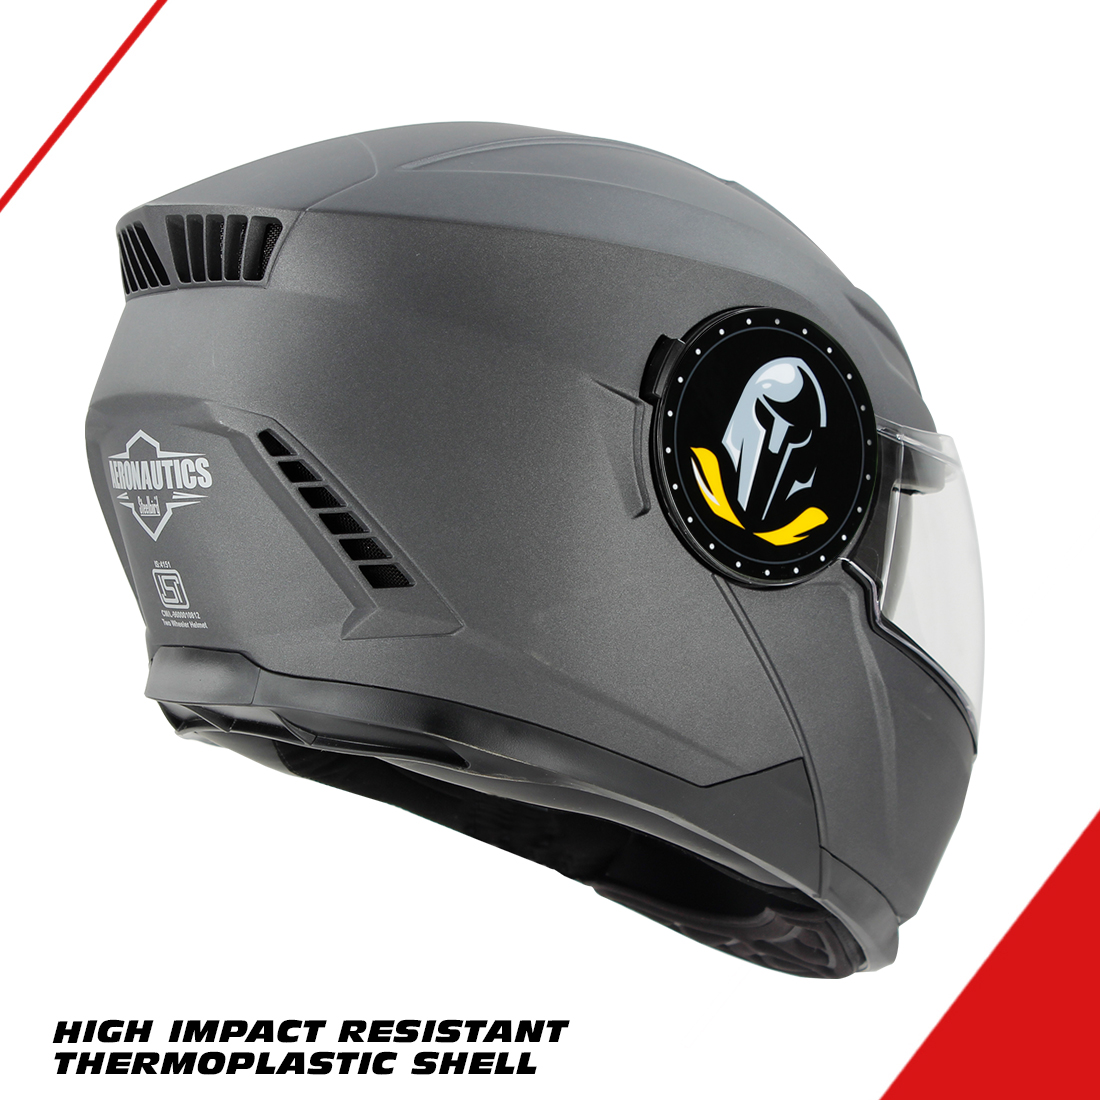 Steelbird SBH-40 ISI Certified Full Face Helmet For Men And Women With Inner Smoke Sun Shield (Matt Axis Grey)